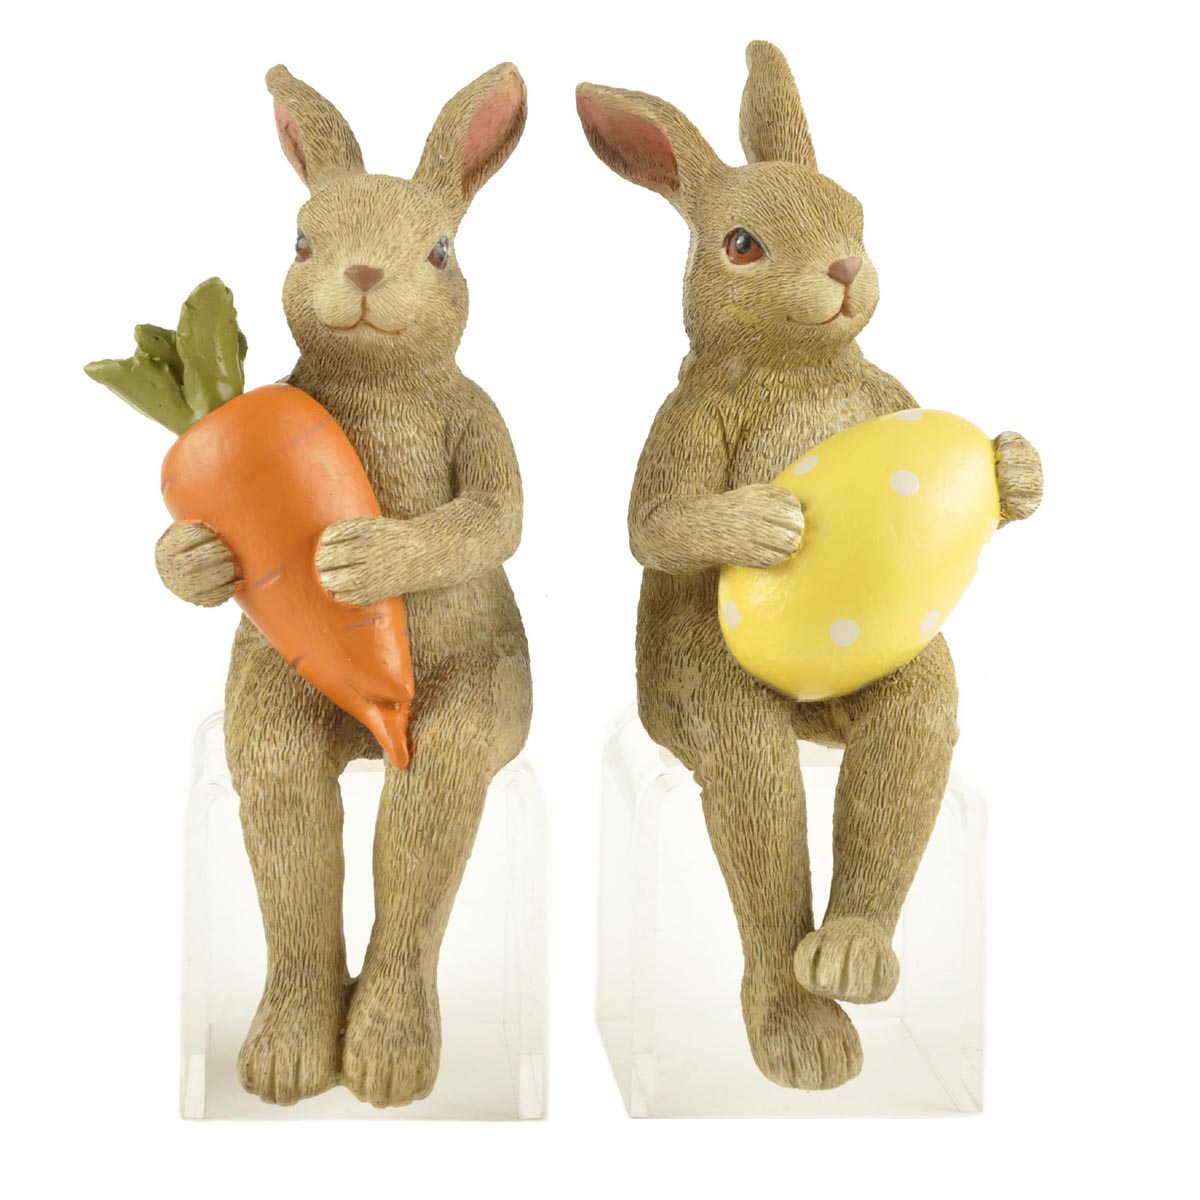 Ennas vintage easter bunny figurines handmade crafts micro landscape-2